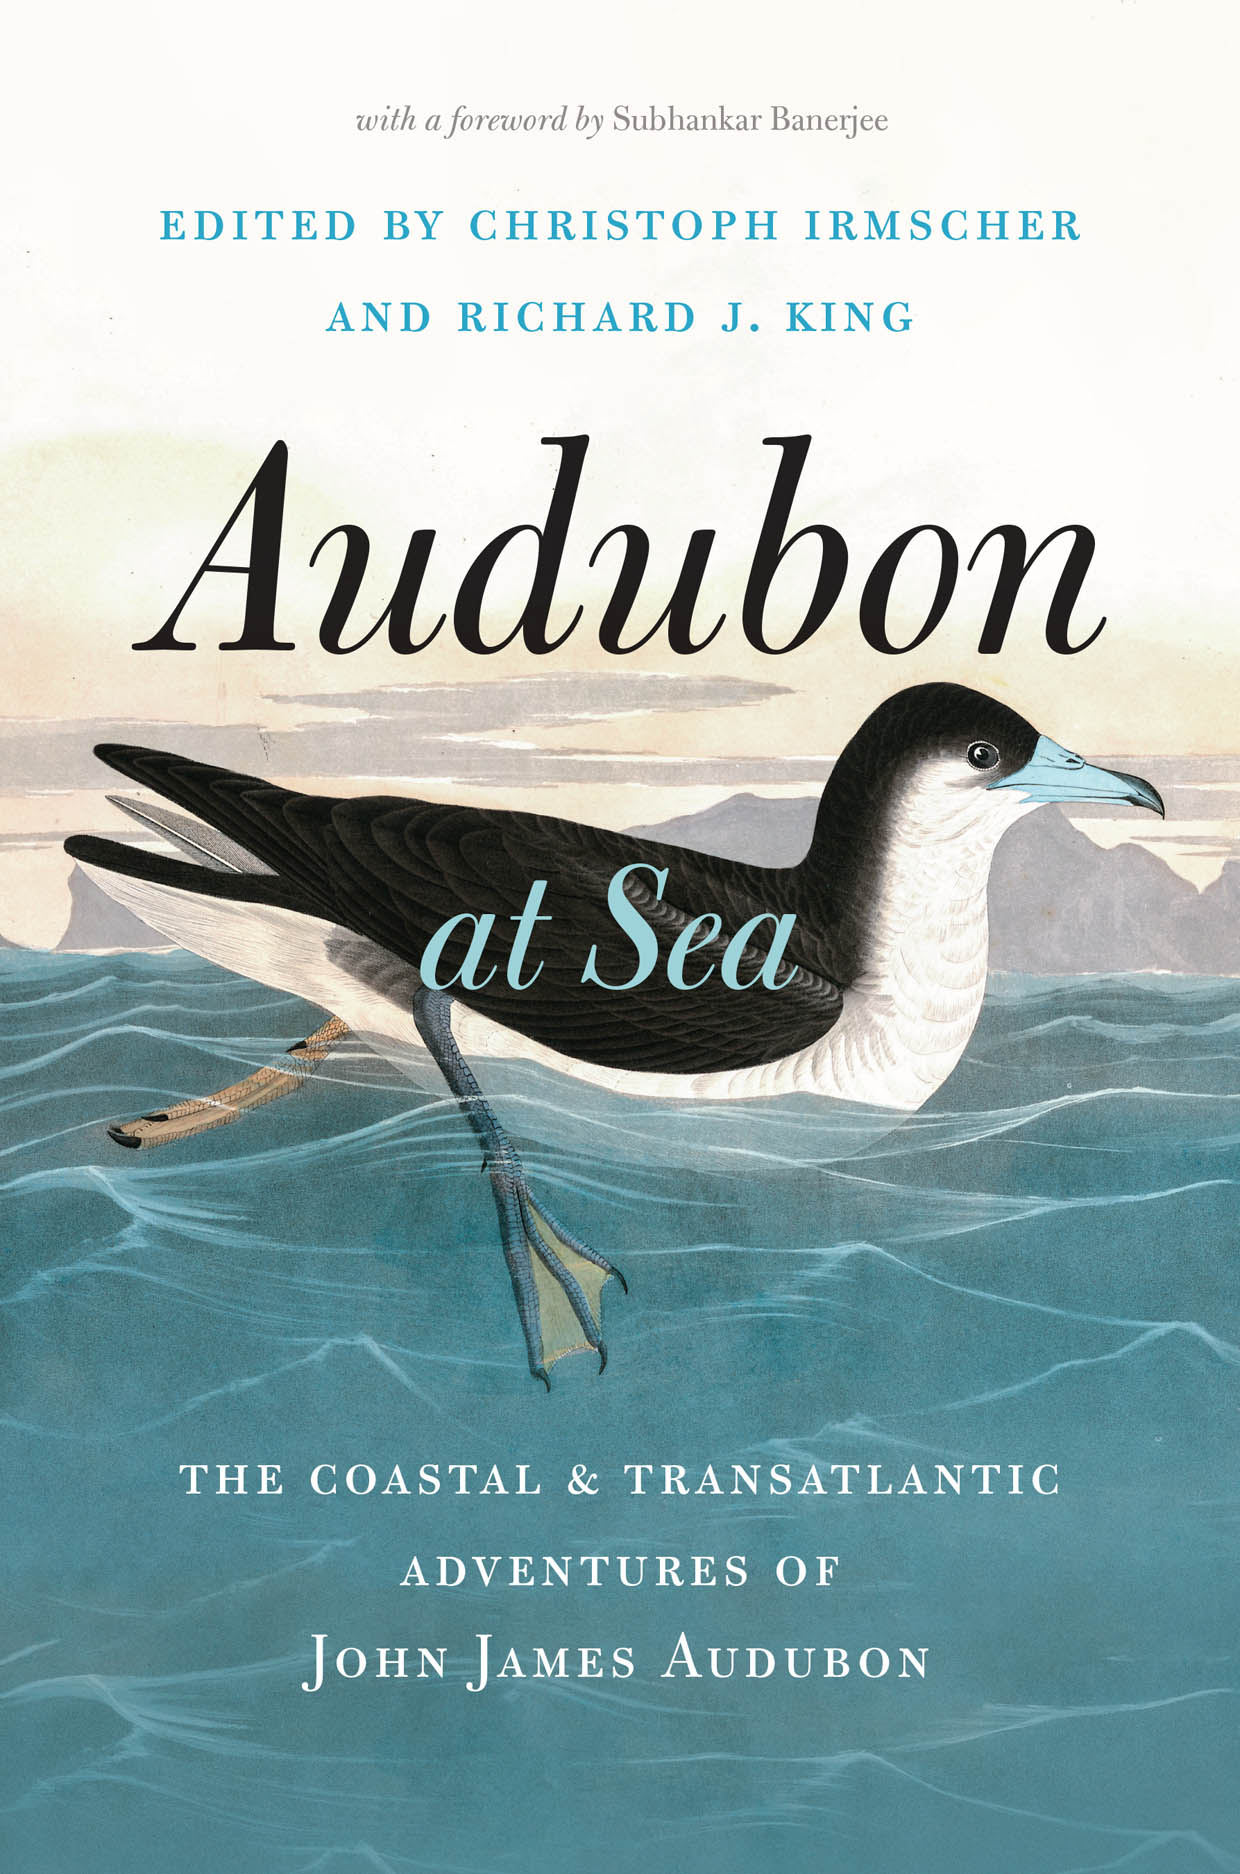 Audubon at Sea: The Coastal and Transatlantic Adventures of John James  Audubon, Irmscher, King, Banerjee